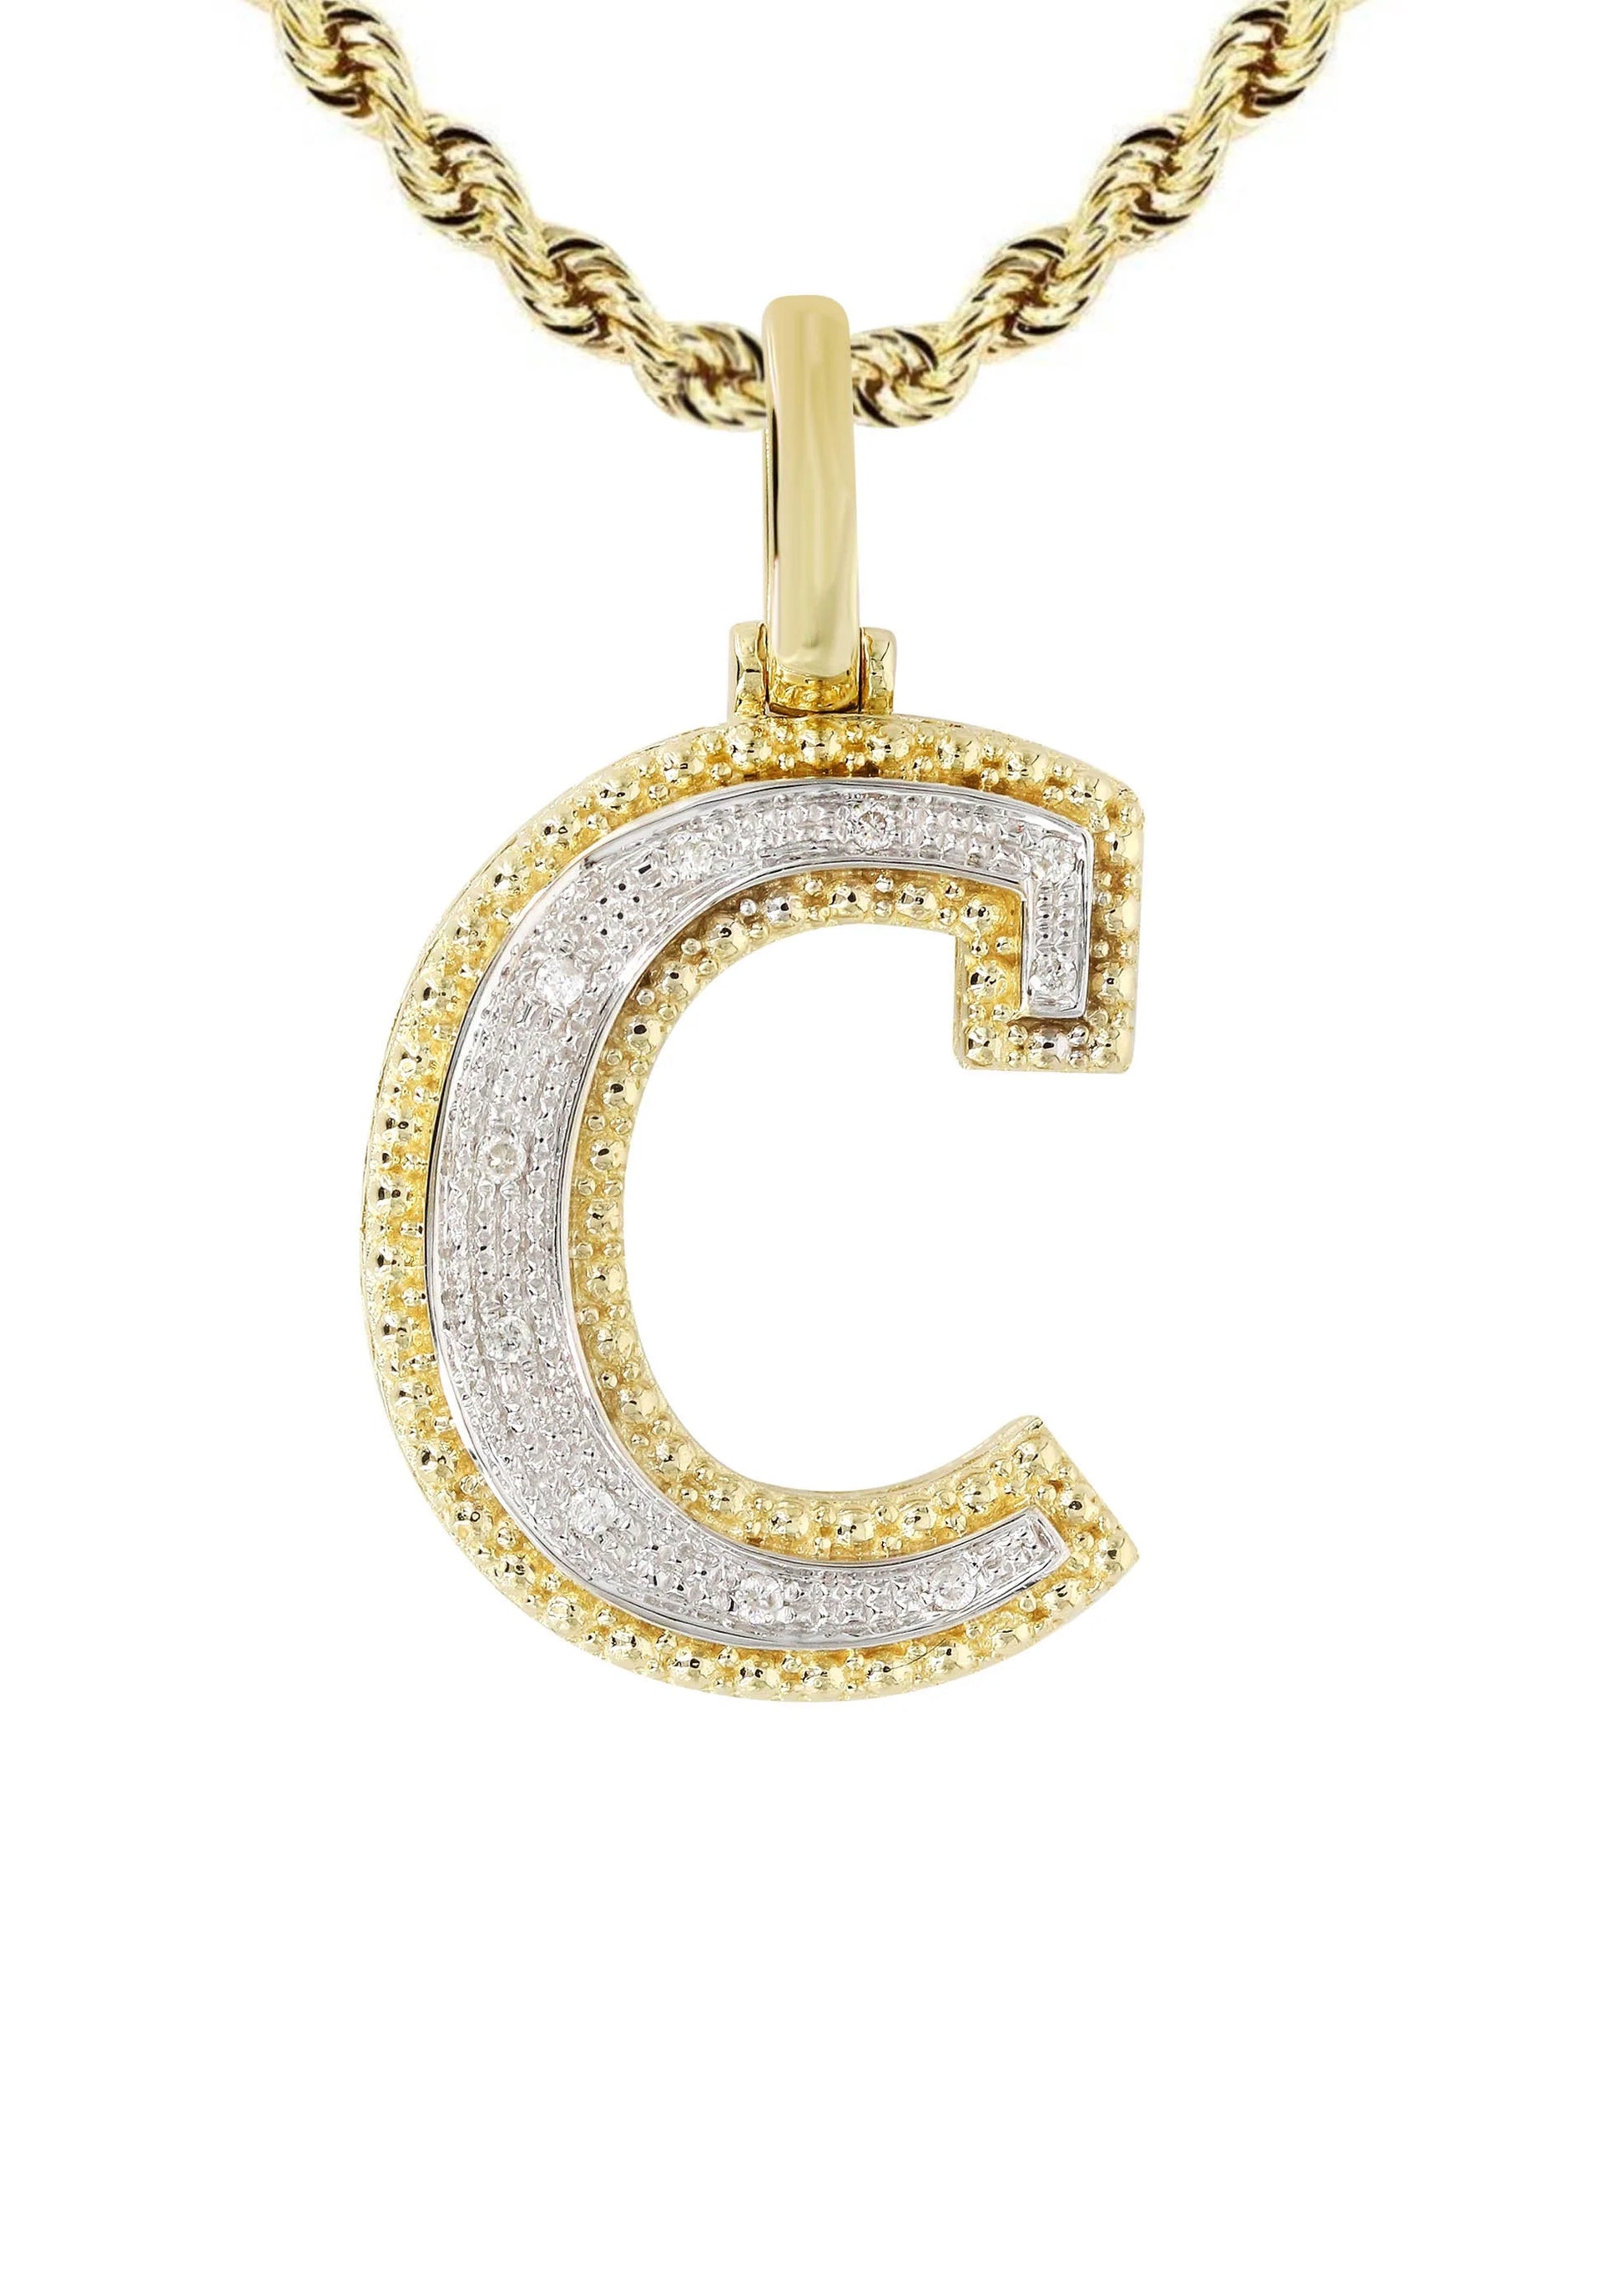 10k Yellow Gold Diamond Pendant Letter "C"